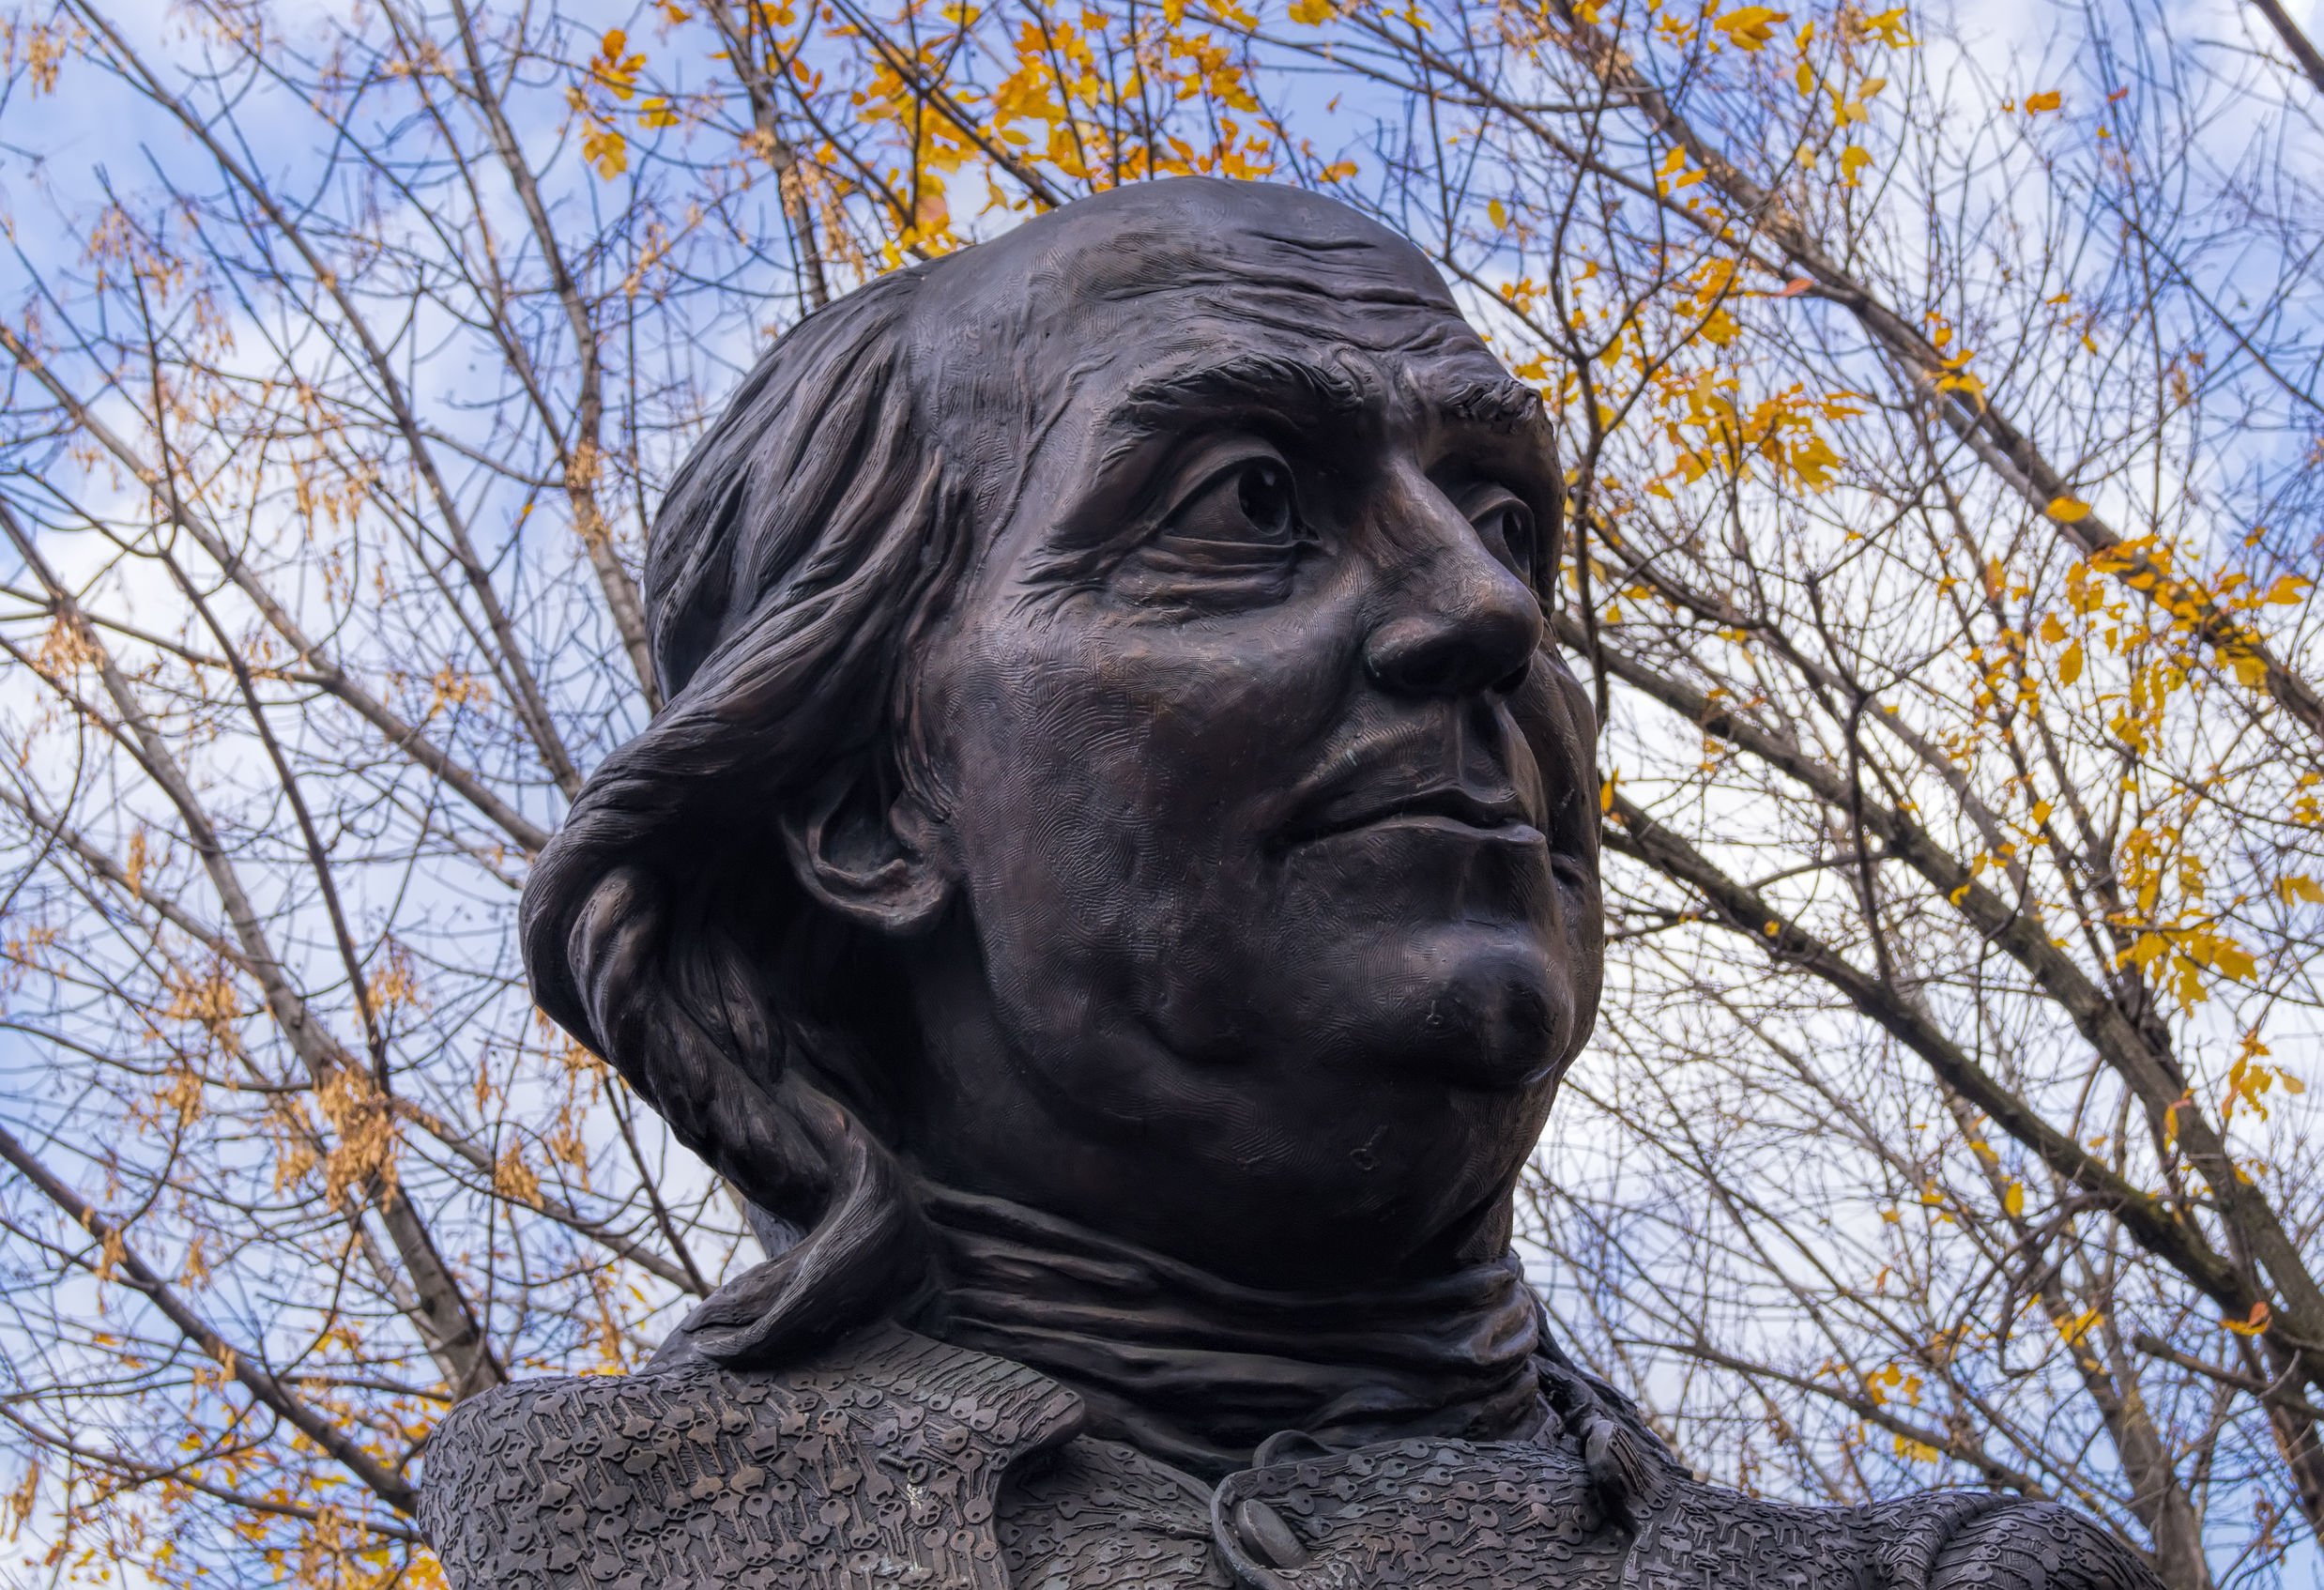  A statue of Ben Franklin